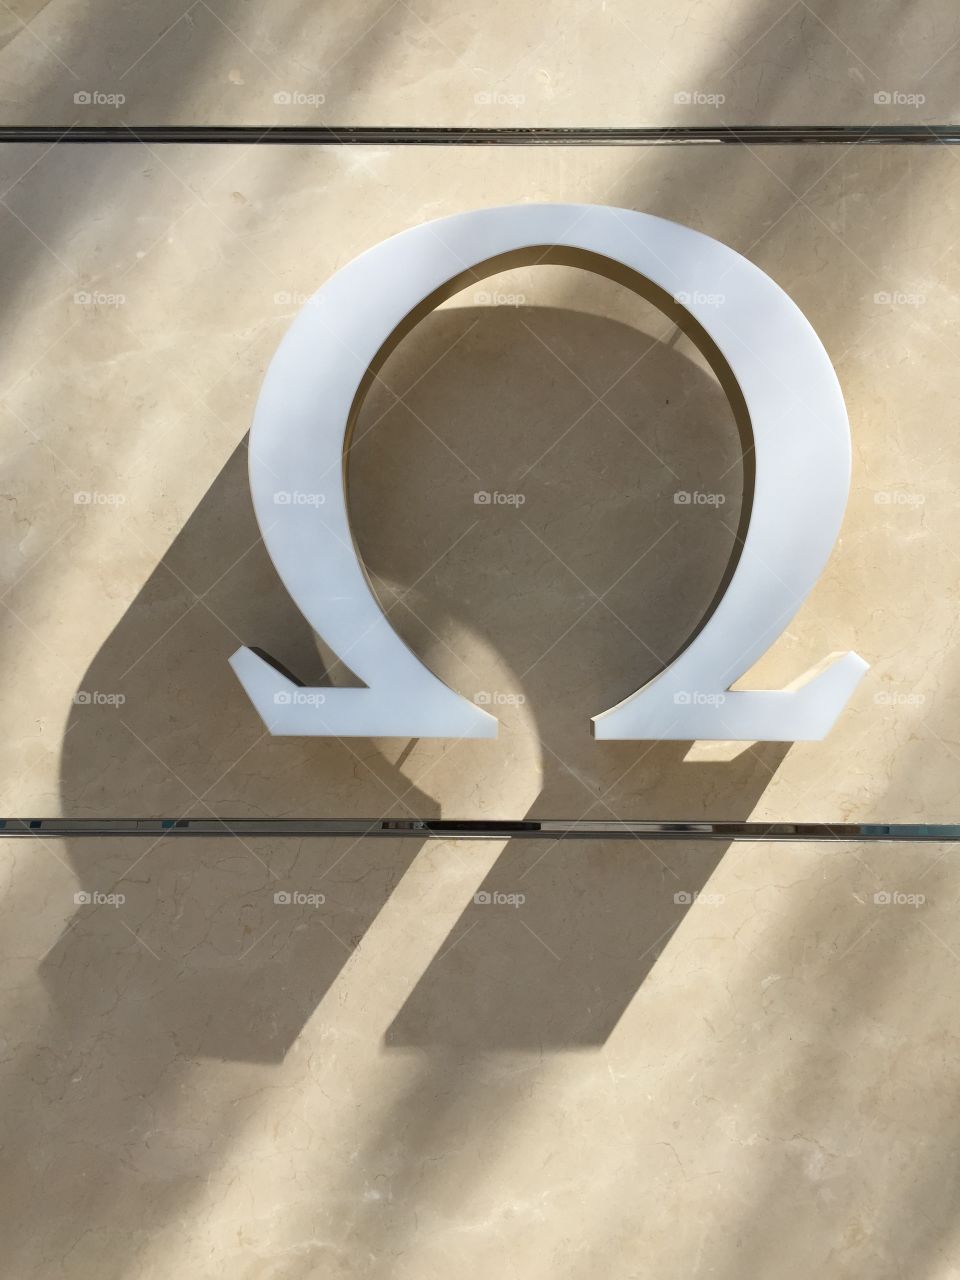 Omega. Omega watch logo on wall outdoors, Design District, Miami, Florida 